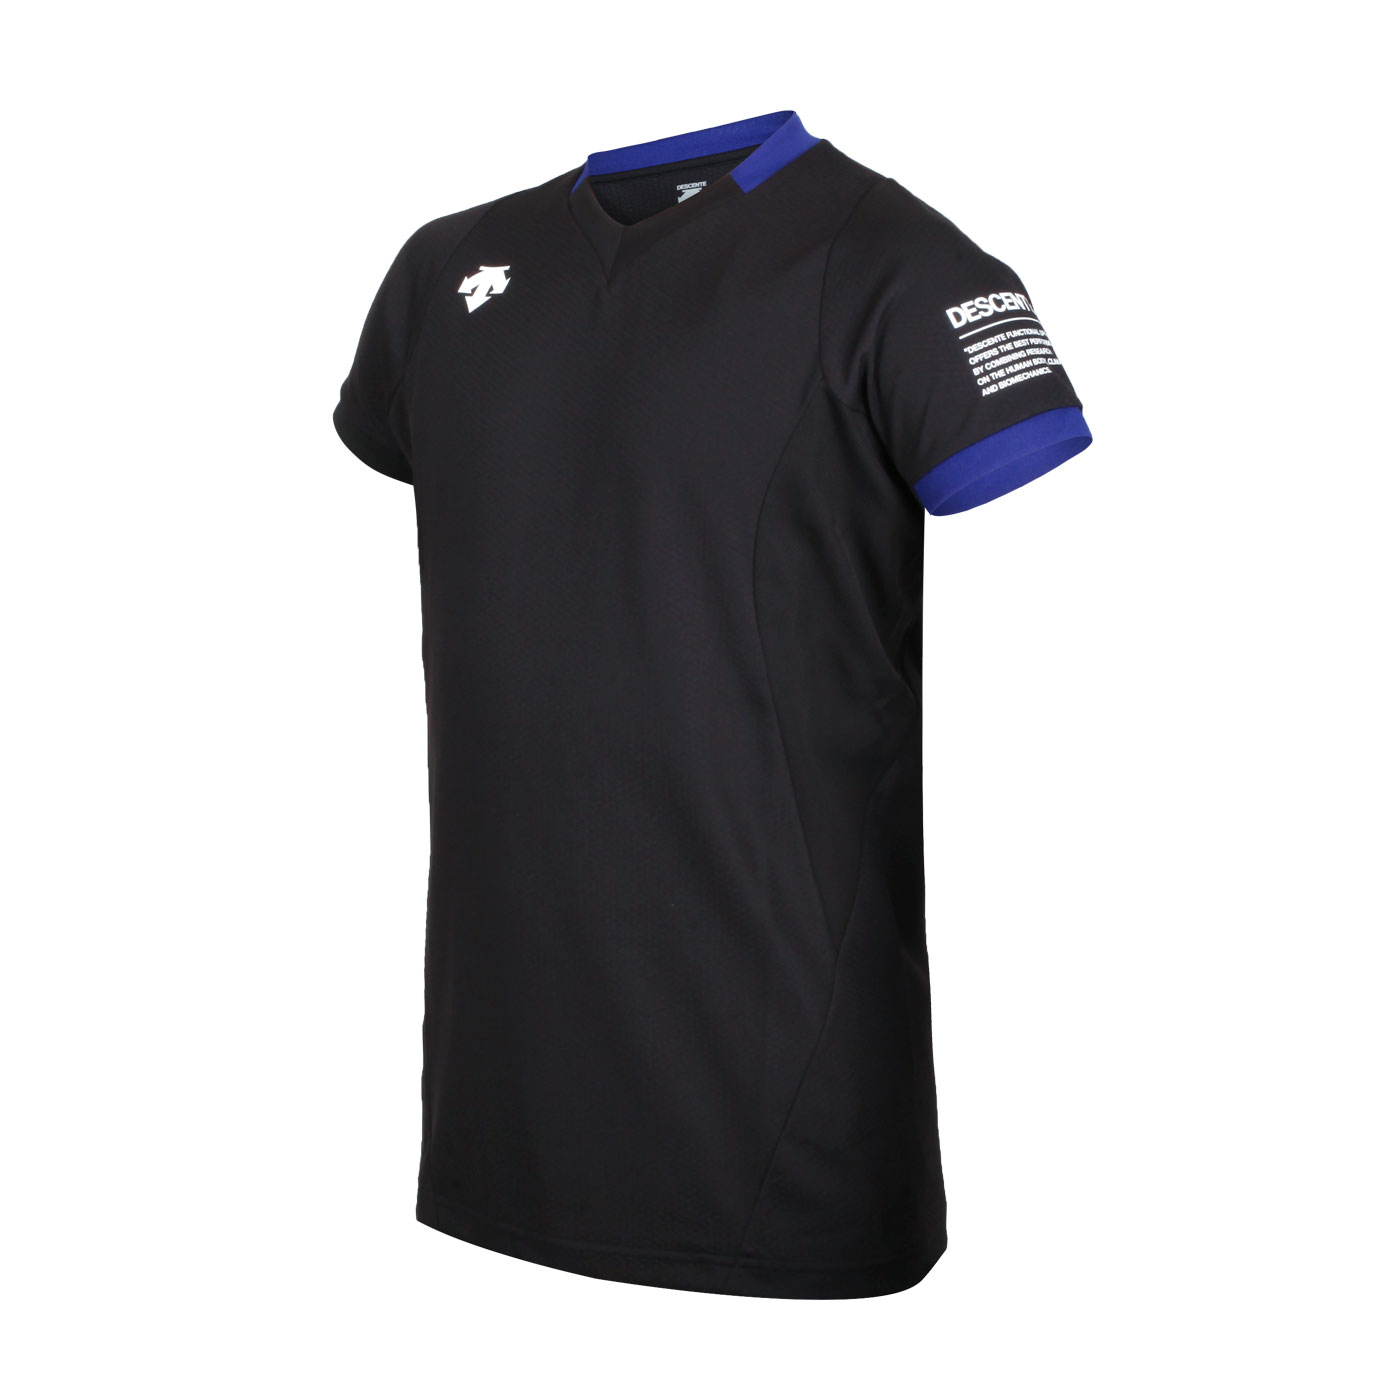 DESCENTE 男款短袖T恤 DSS-5920T-BLK - 黑藍白